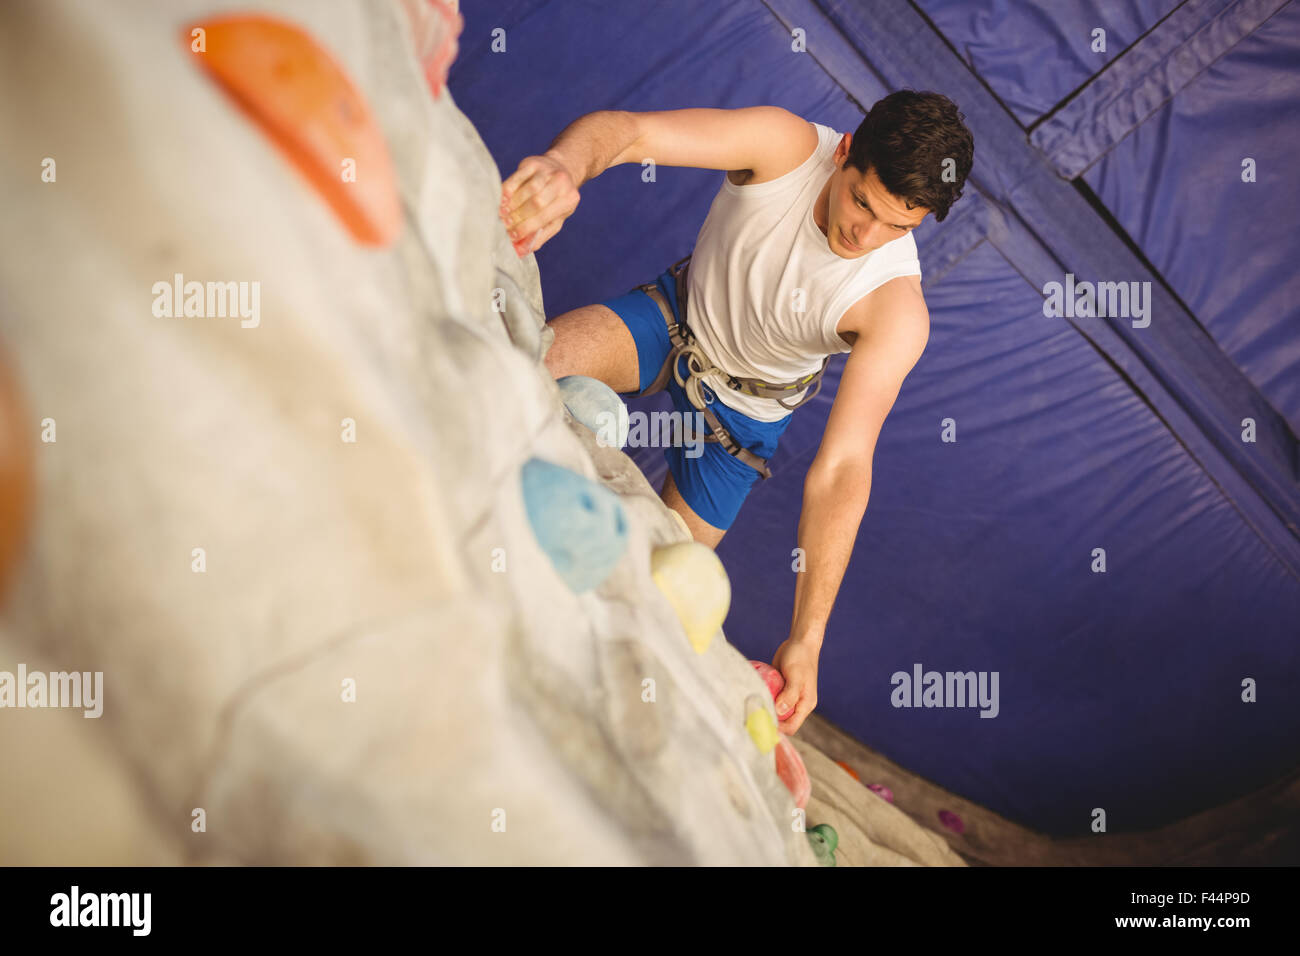 Man climbing up rock wall Stock Photo